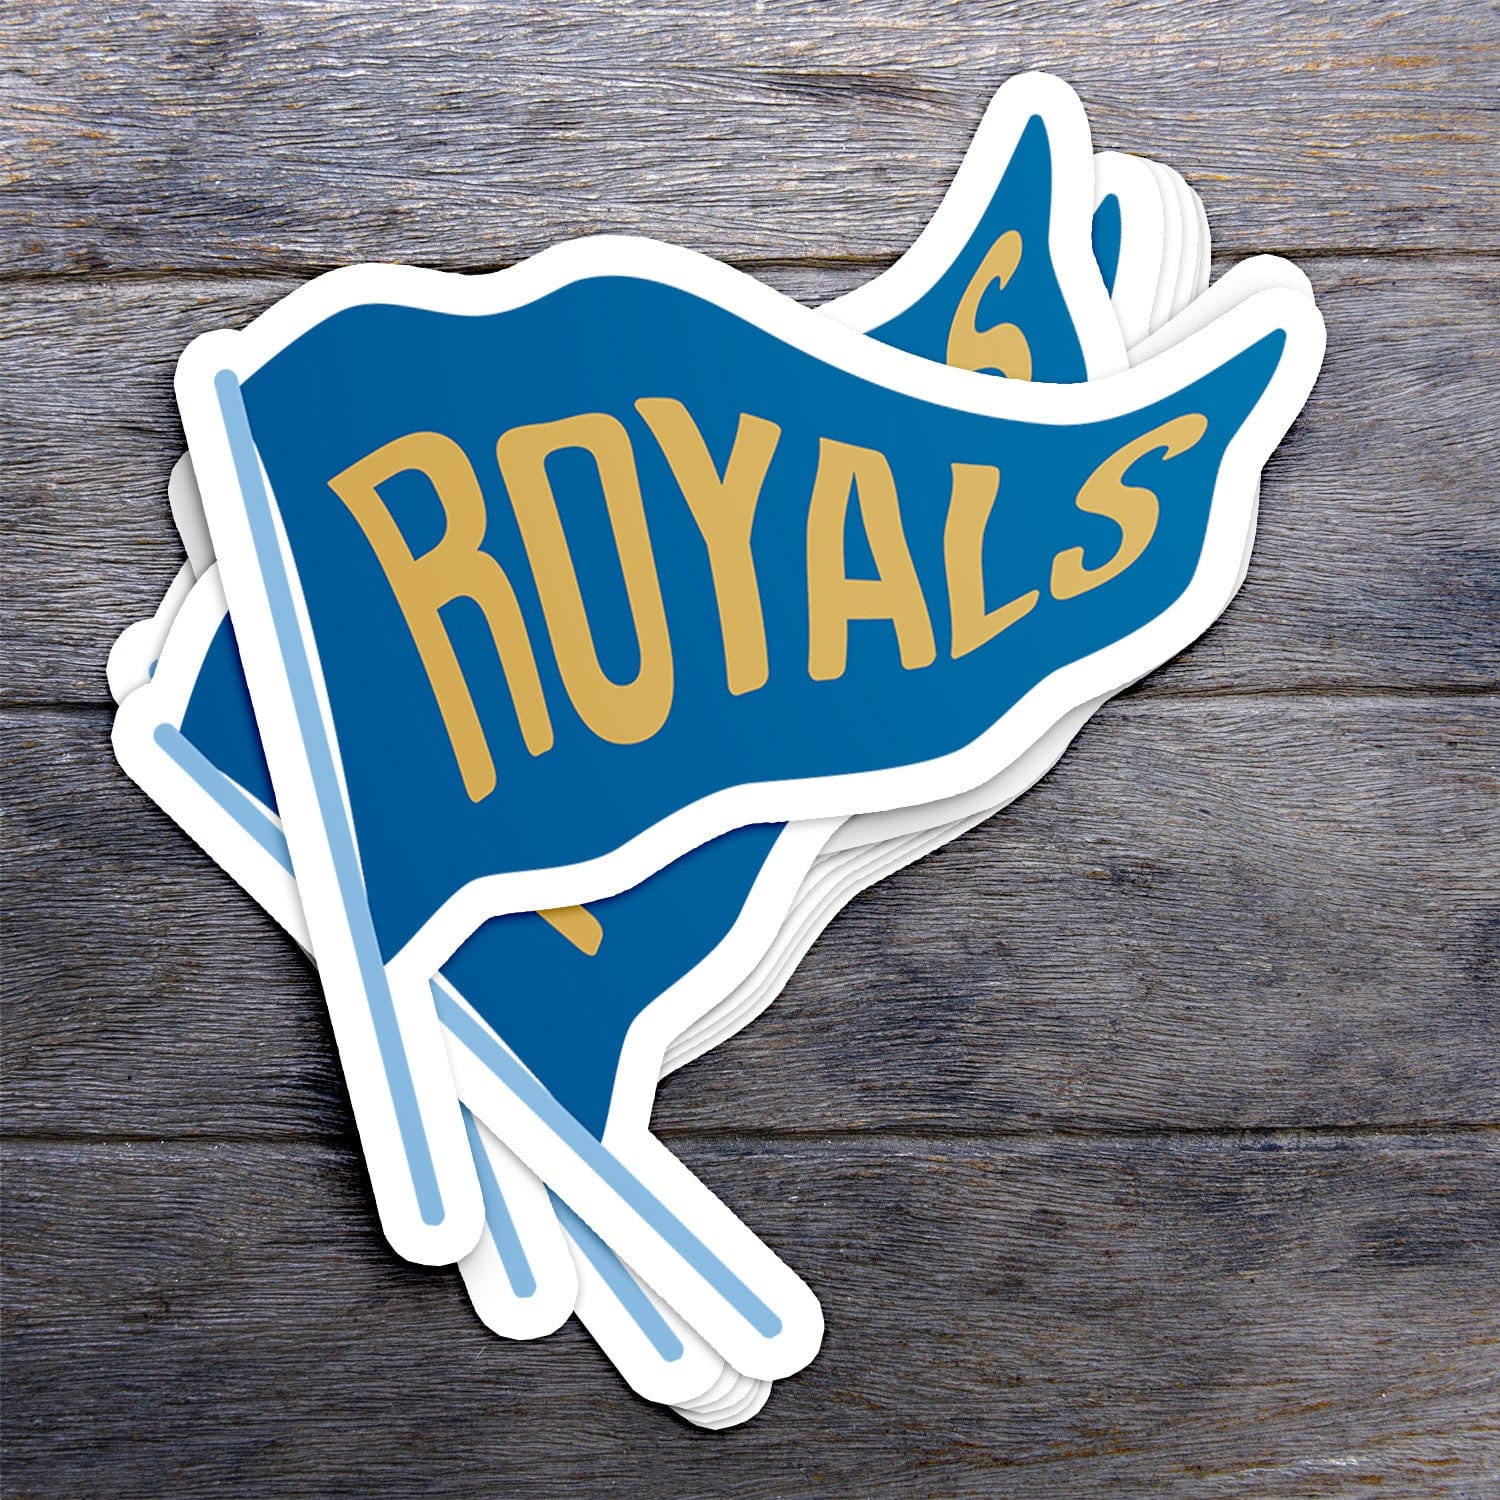 KC Swag Kansas City Royals blue, gold, powder Royals Pennant vinyl die cut decal sticker stack on dark wood table